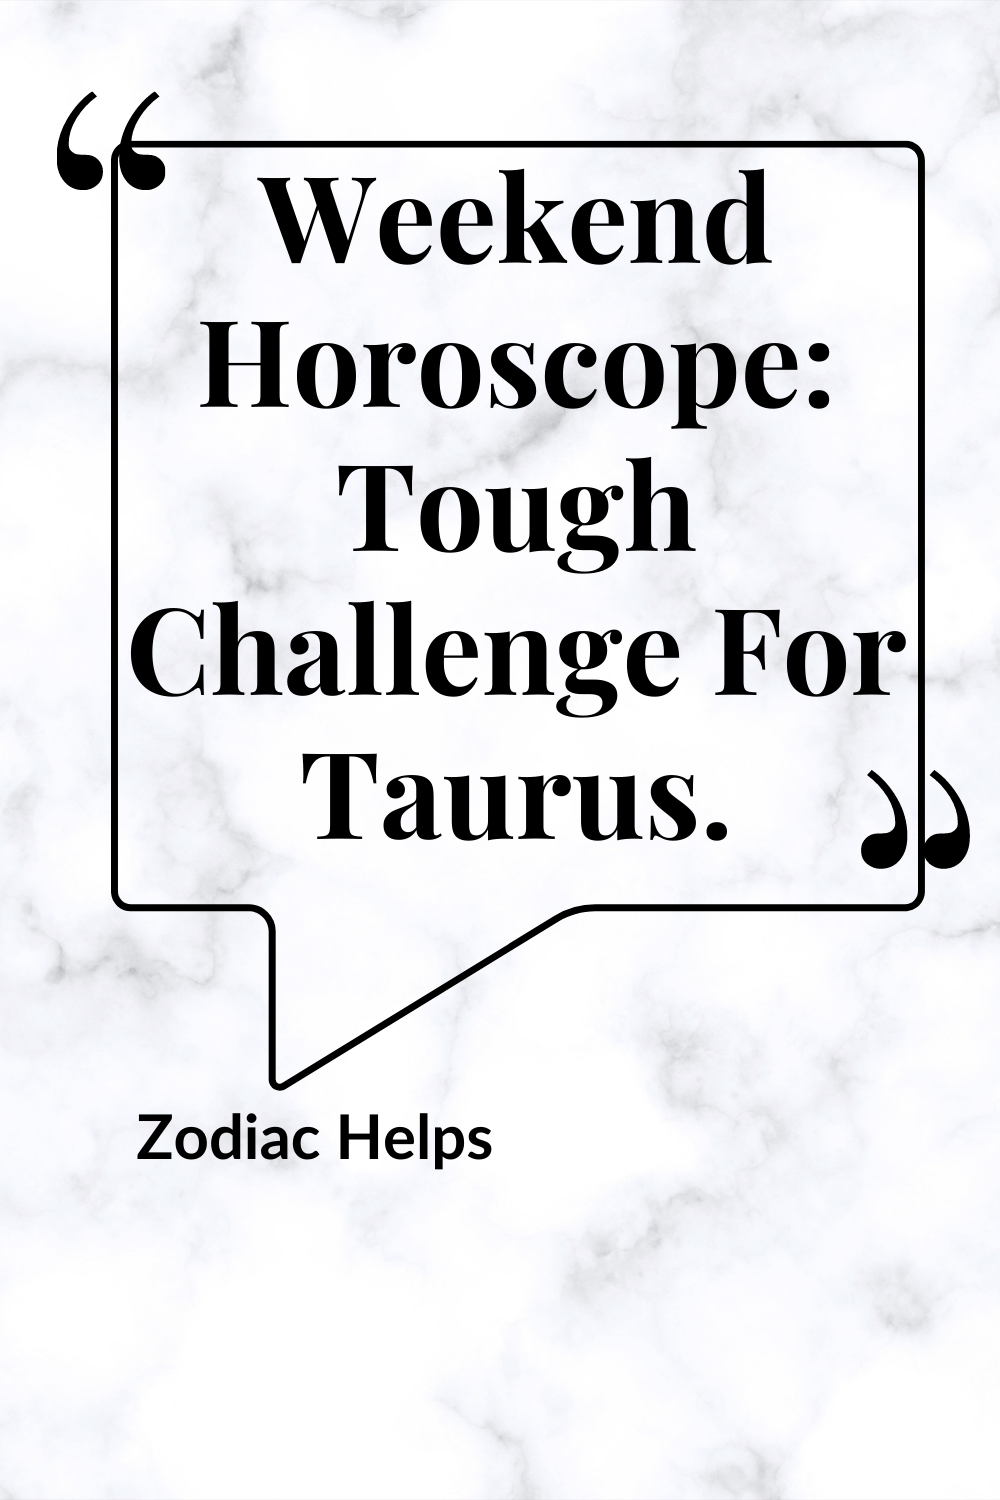 Weekend Horoscope: Tough Challenge For Taurus.